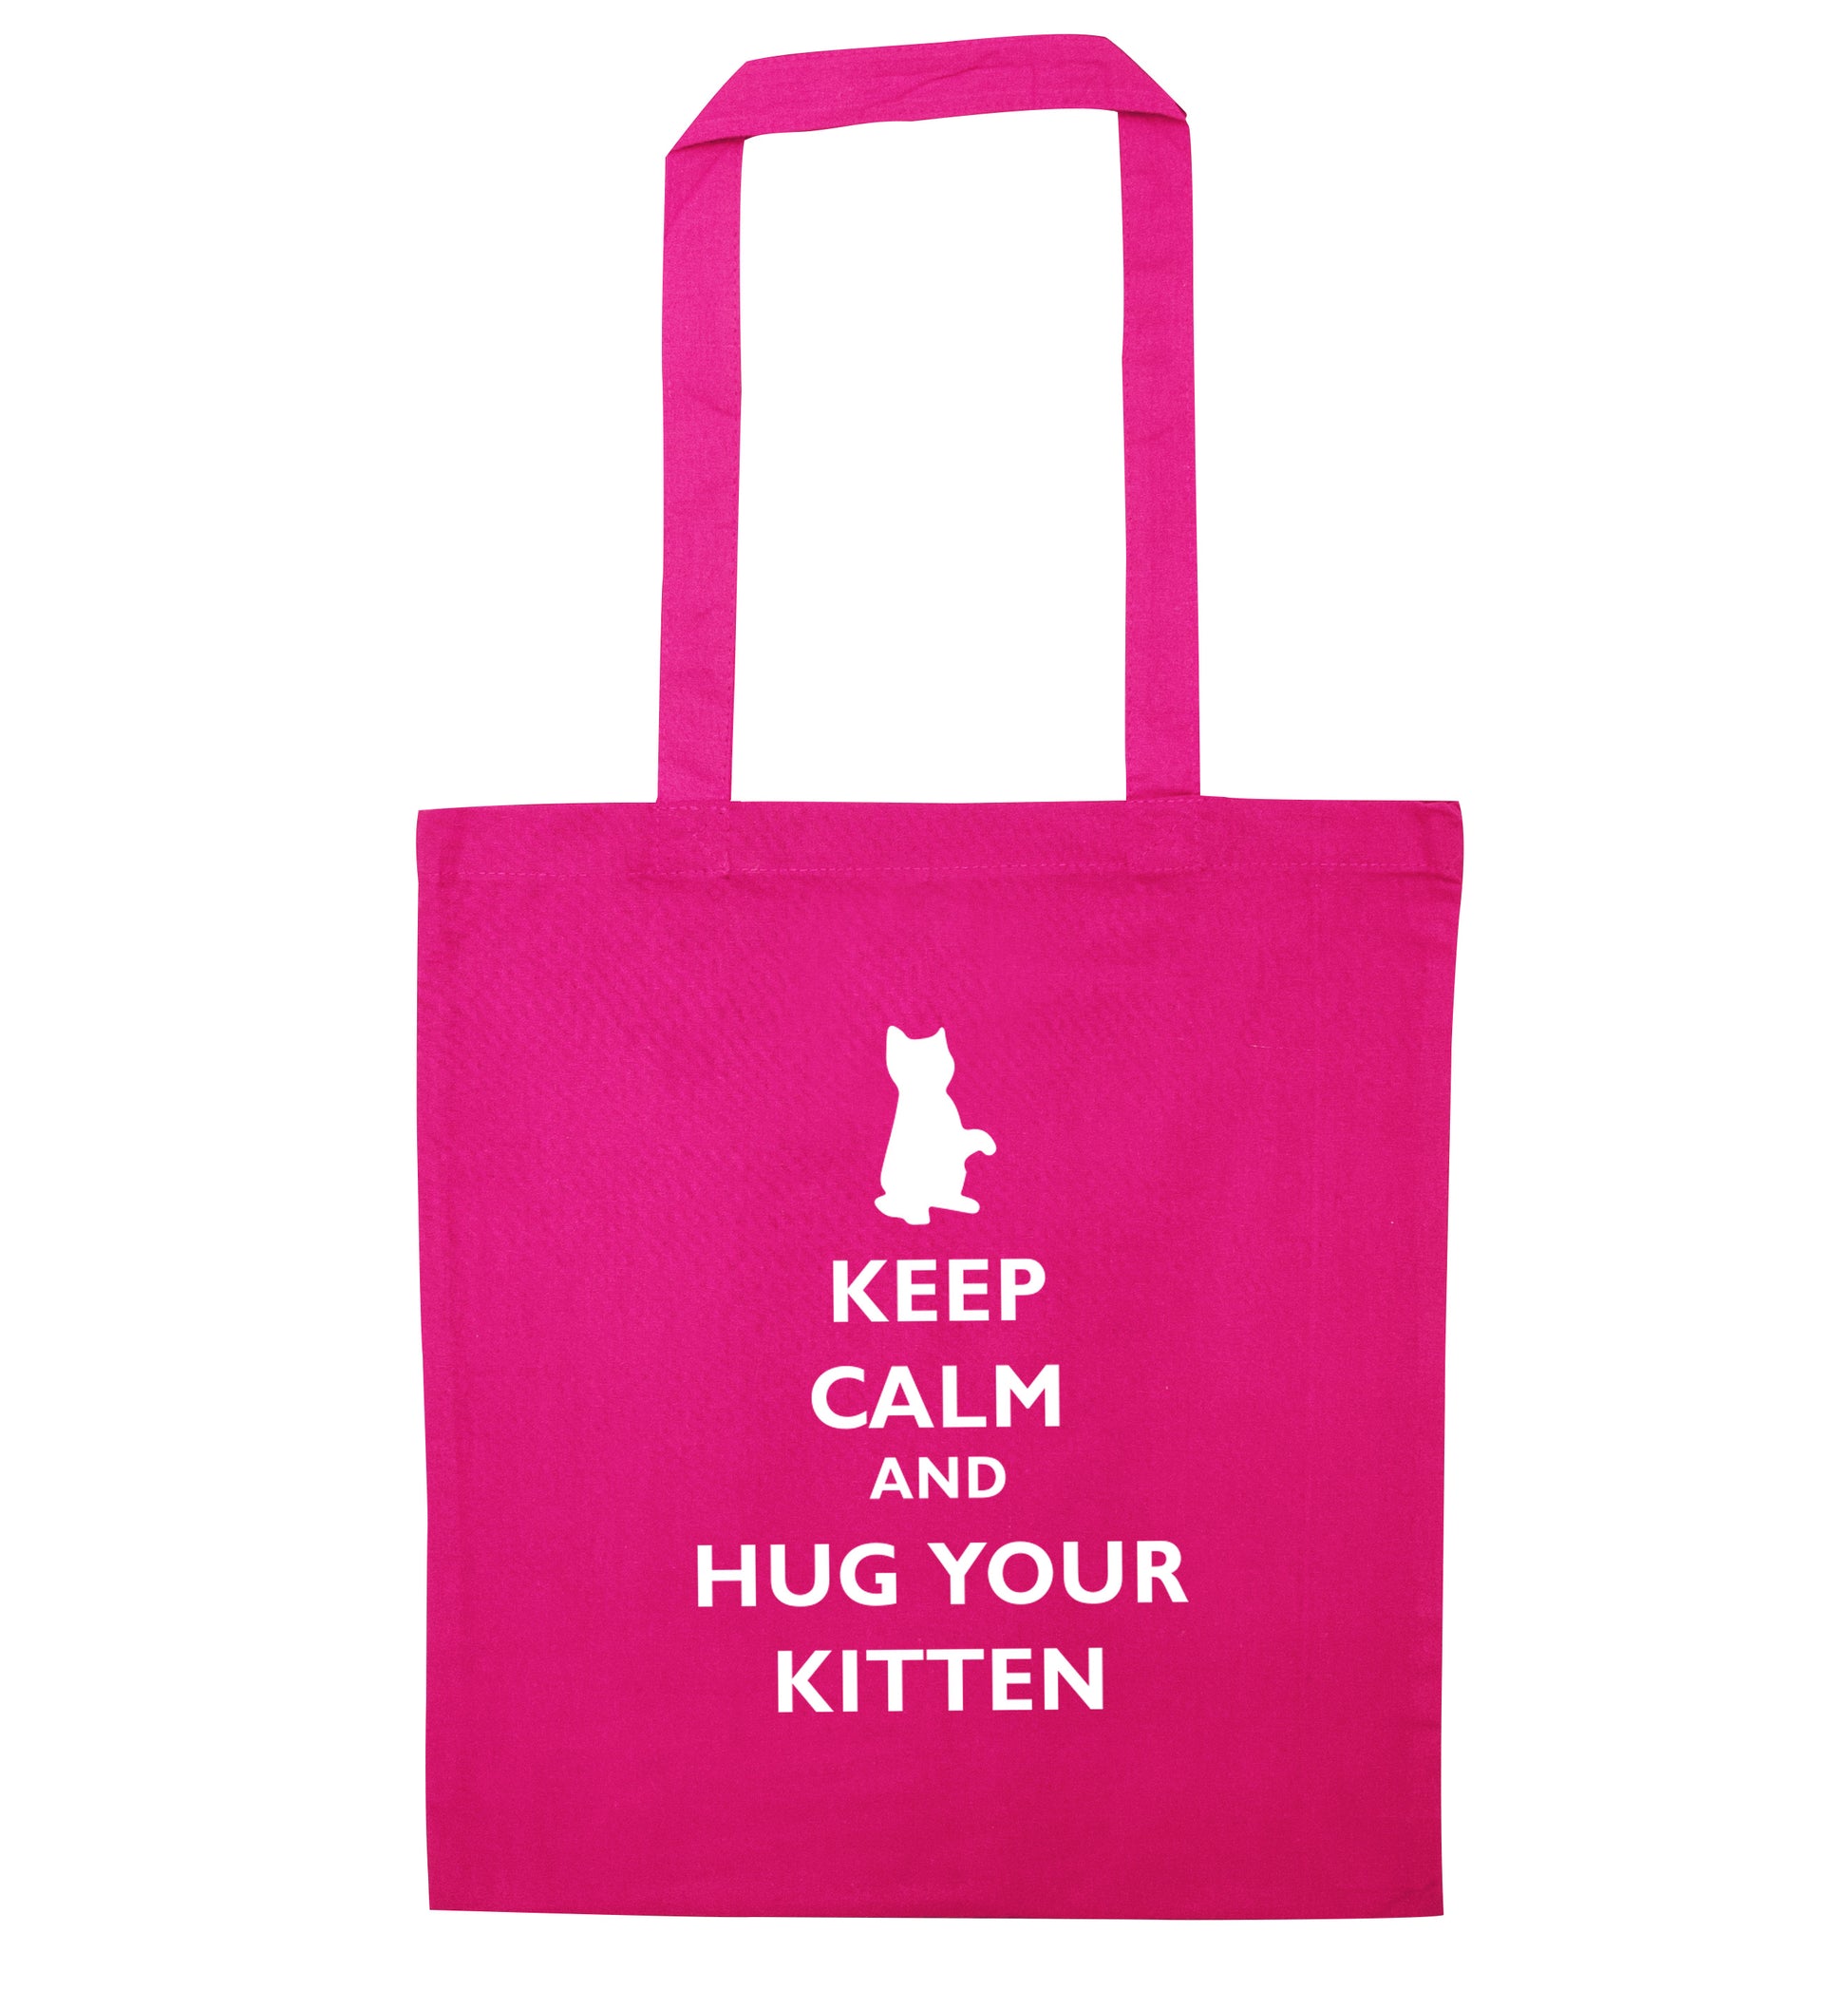 Keep calm and hug your kitten pink tote bag